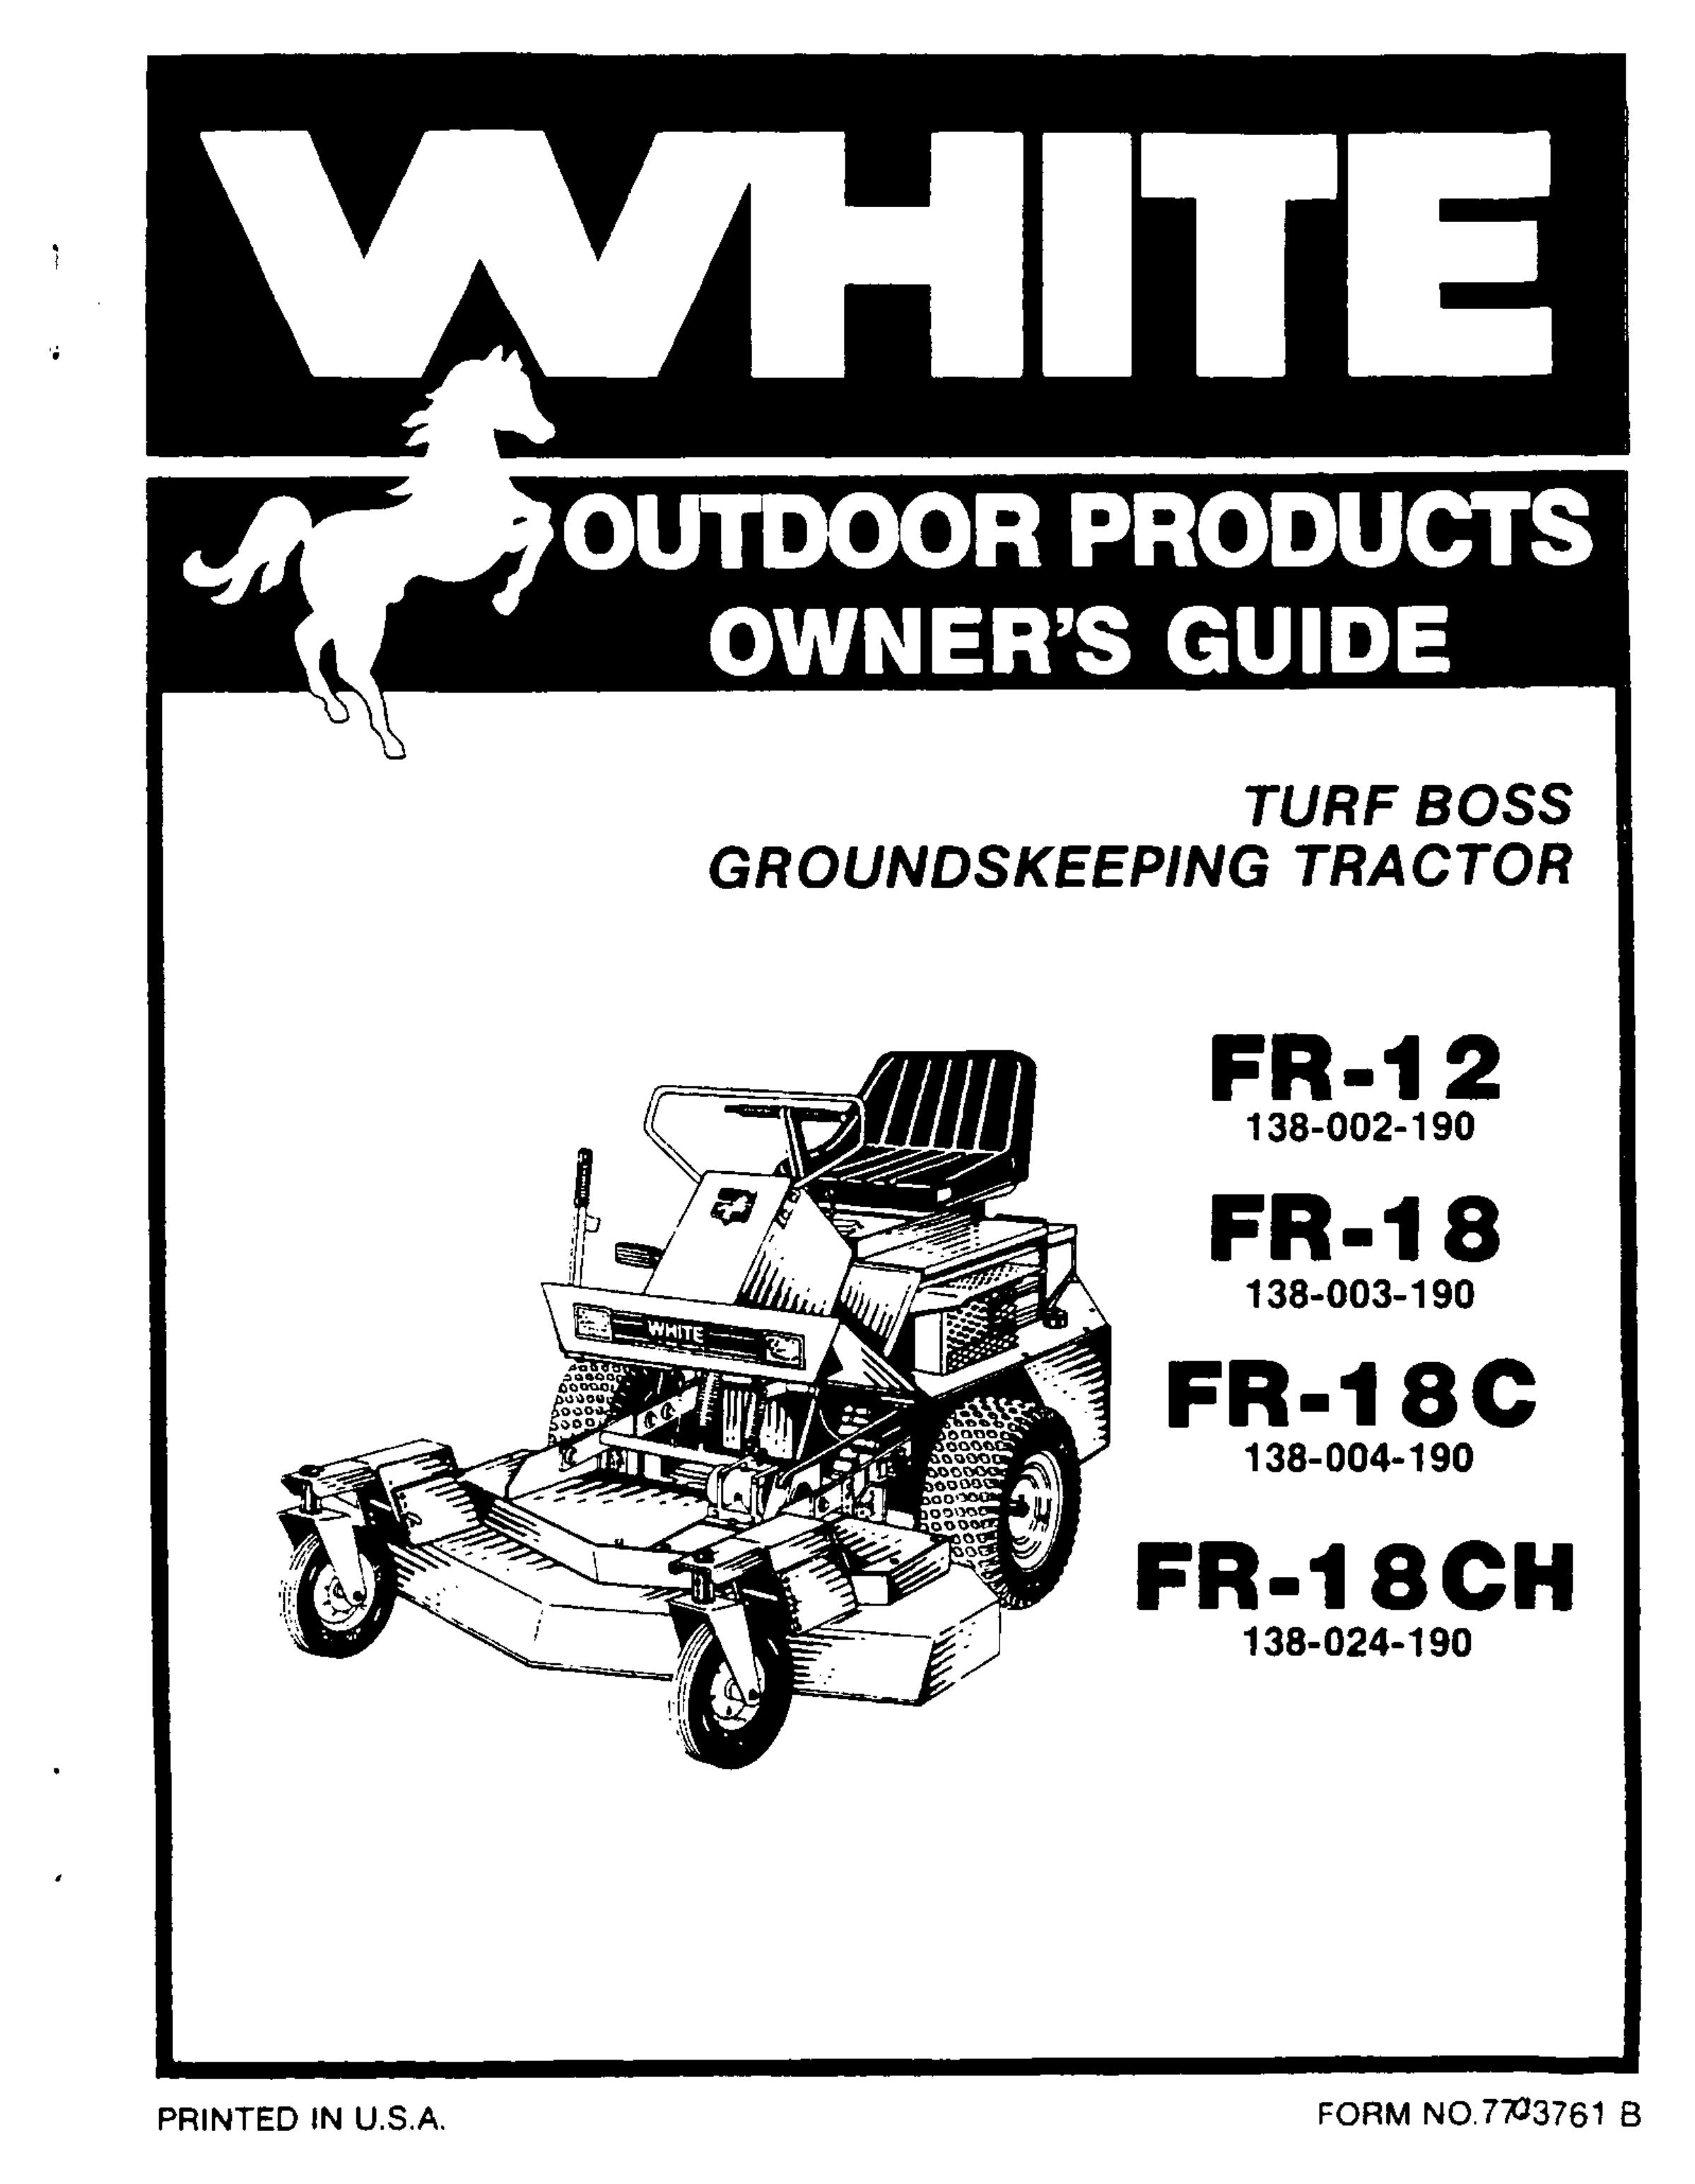 White FR-12 Lawn Mower User Manual